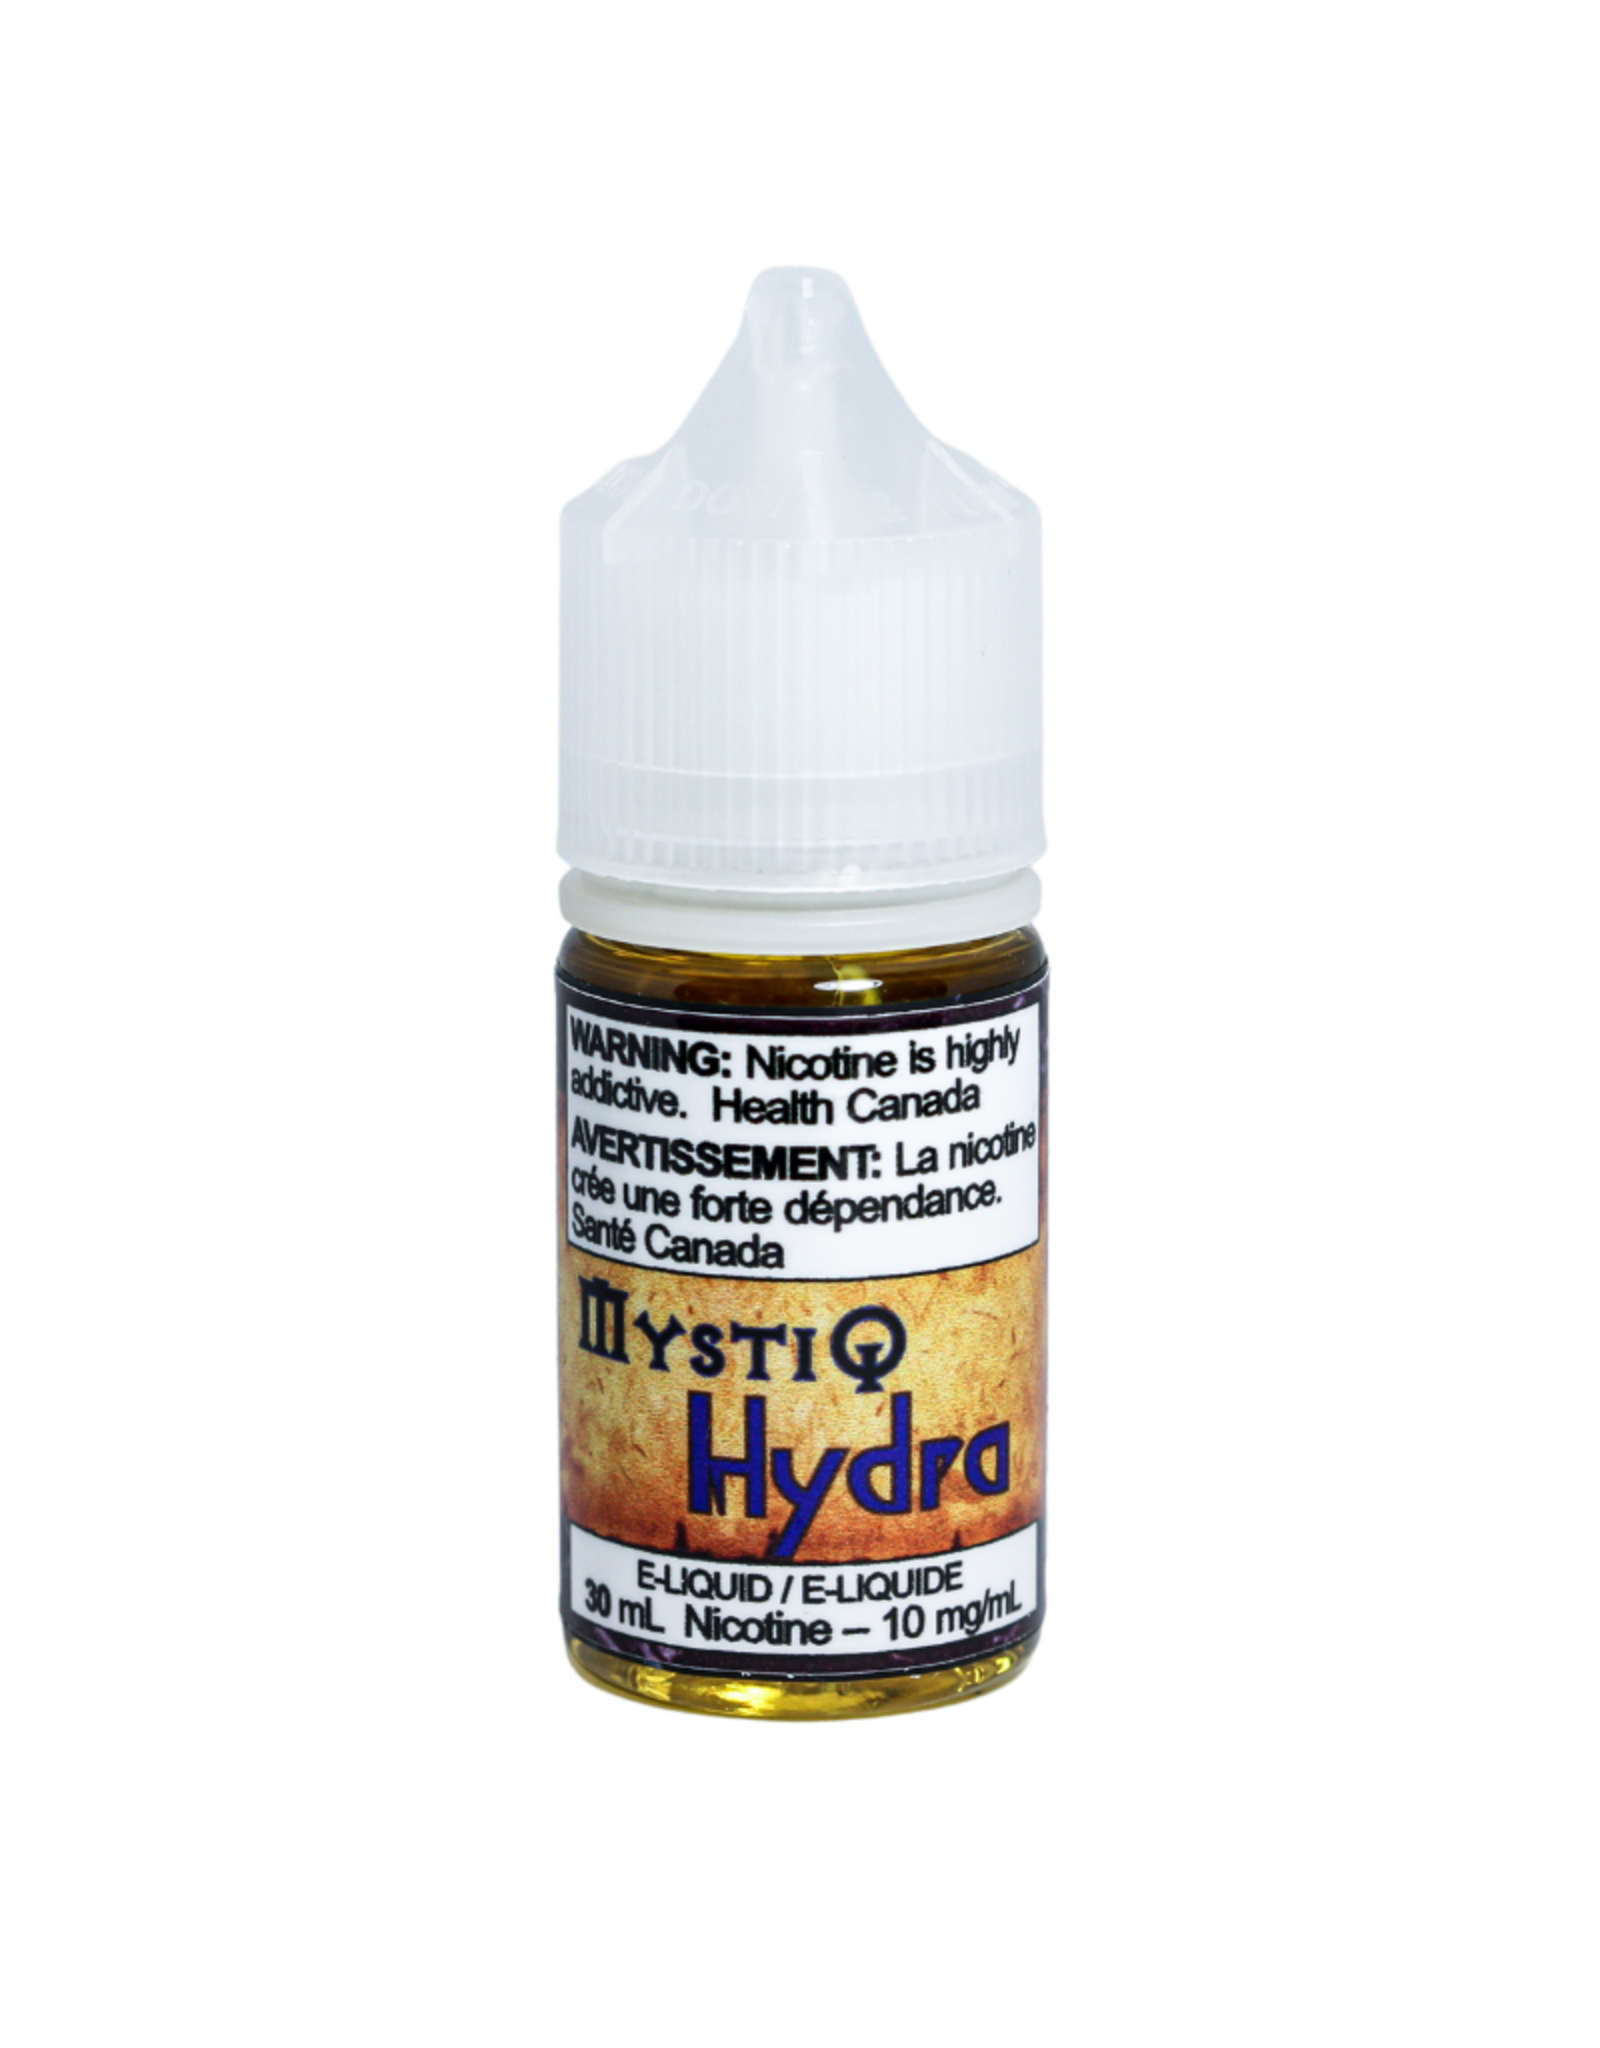 Refined Labs MystiQ E-juice | Salt Nic (30mL)